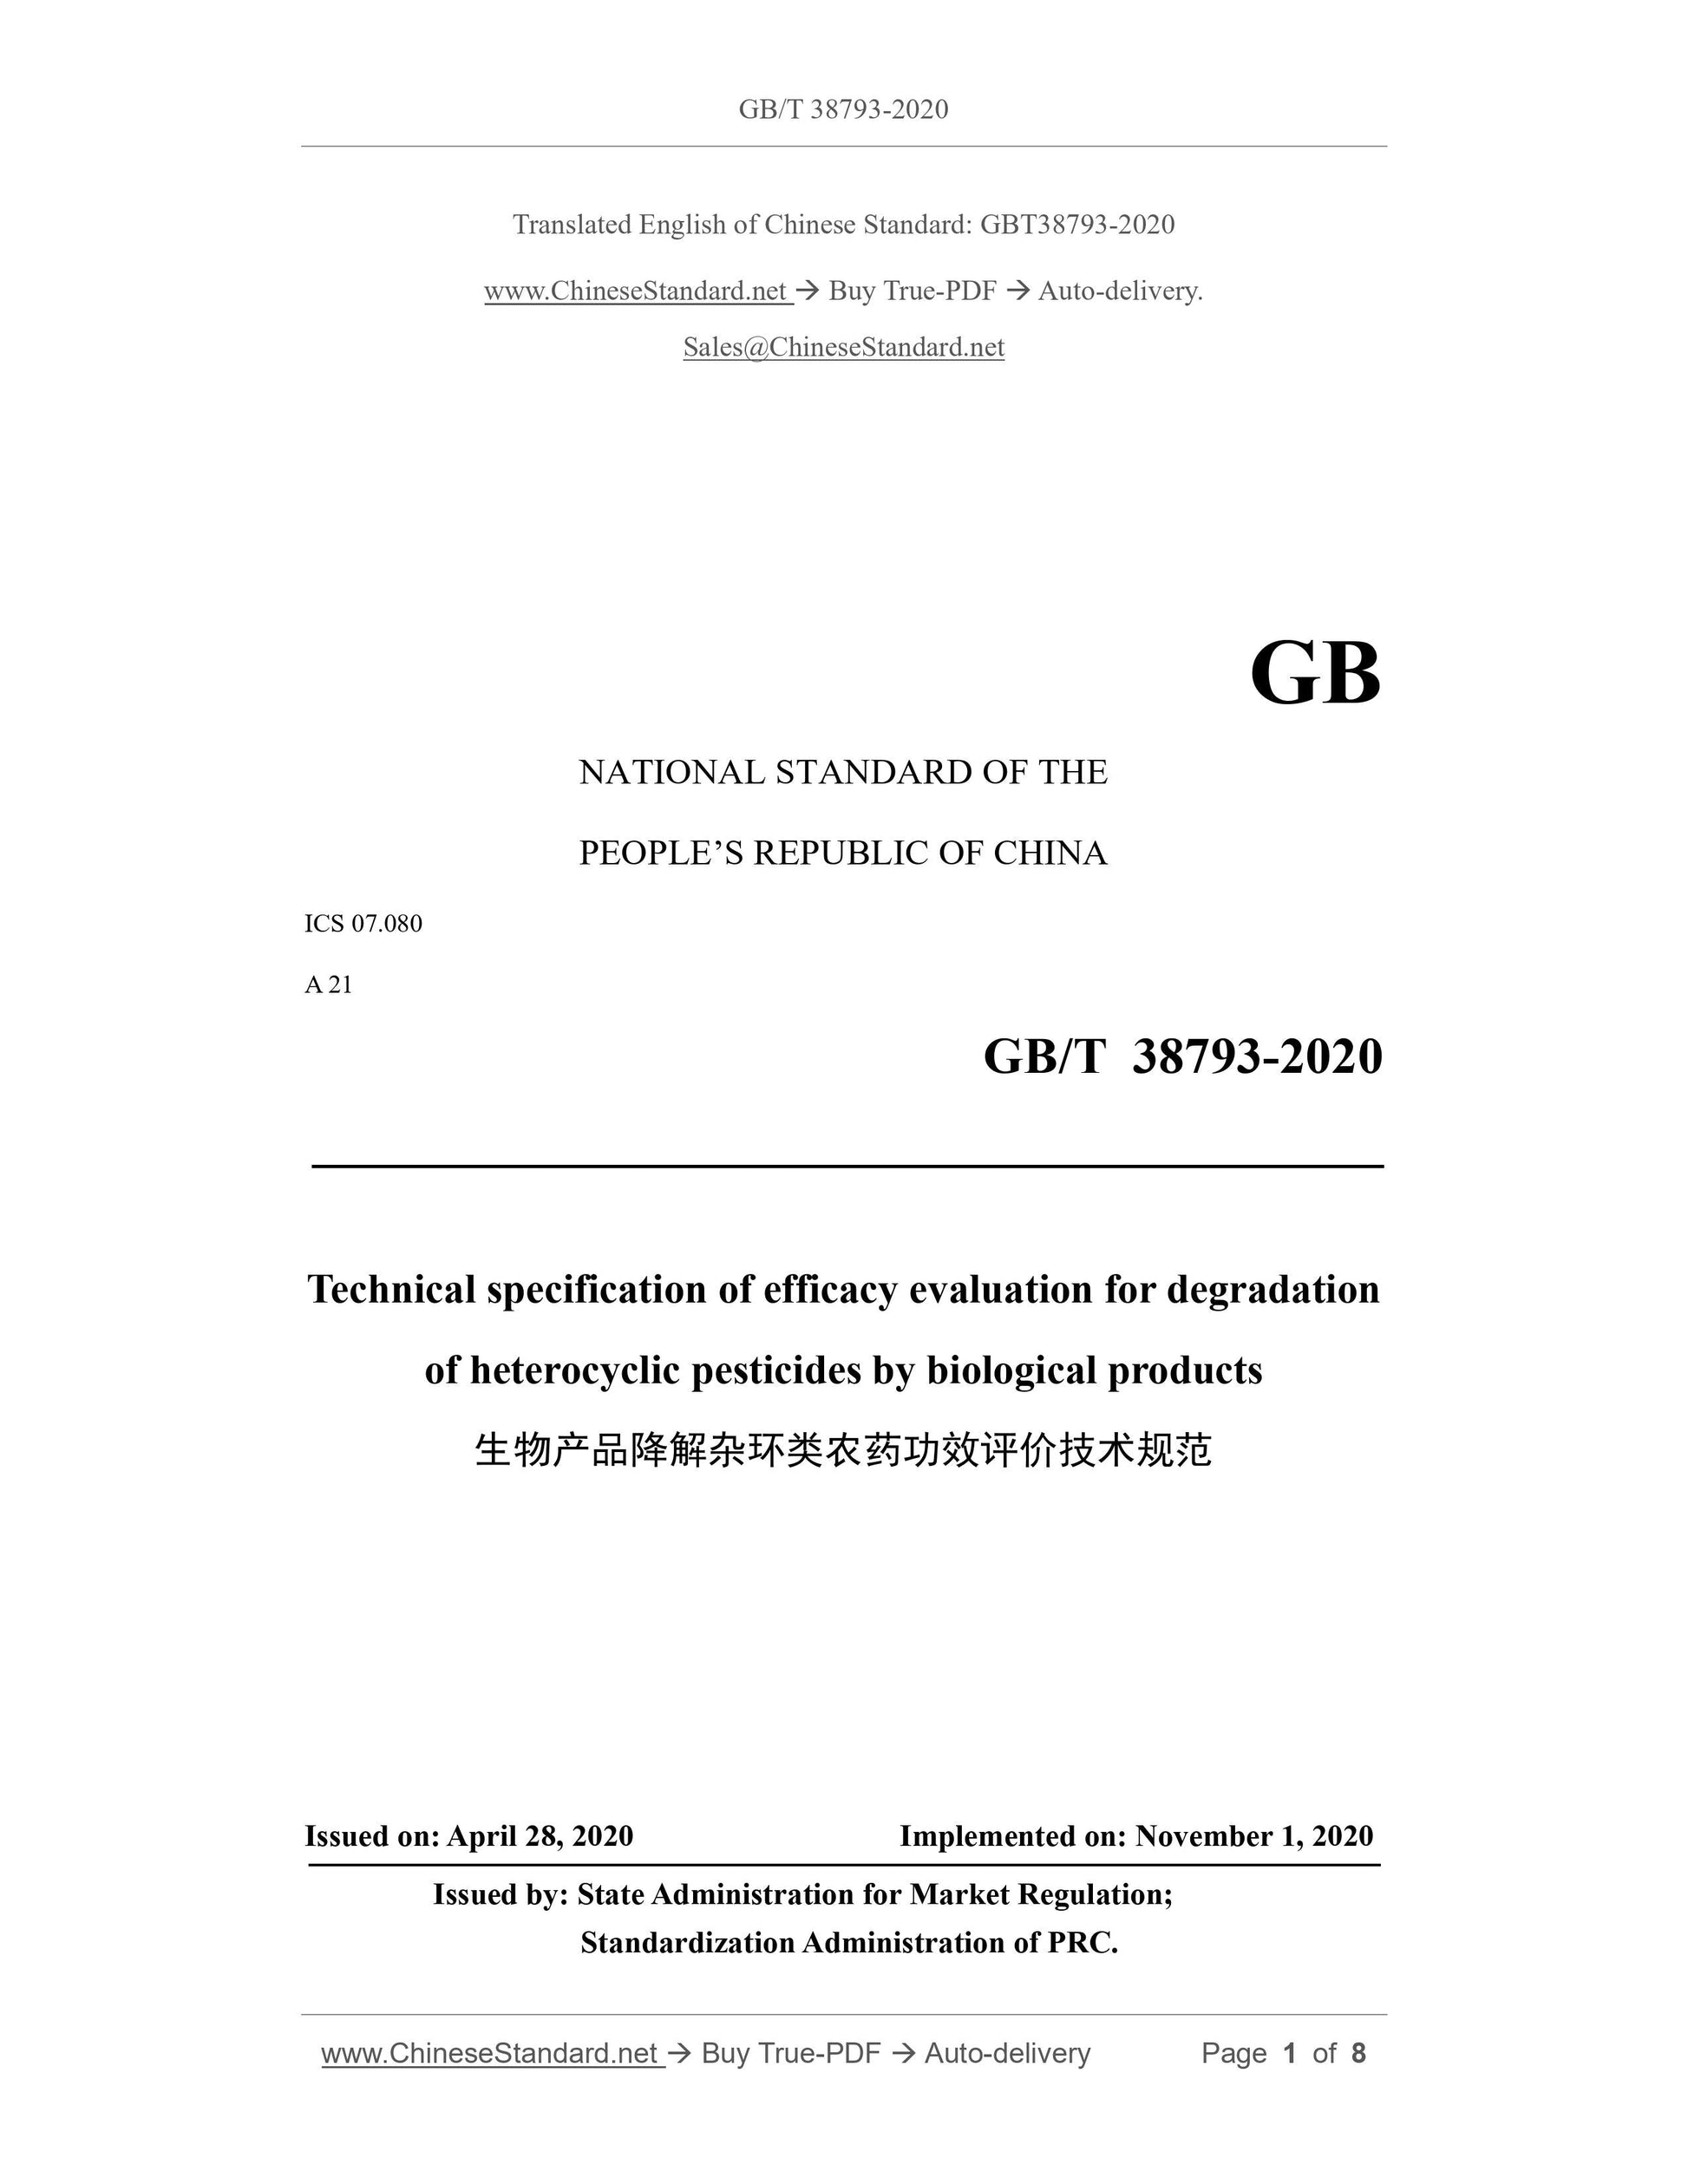 GBT38793-2020 Page 1